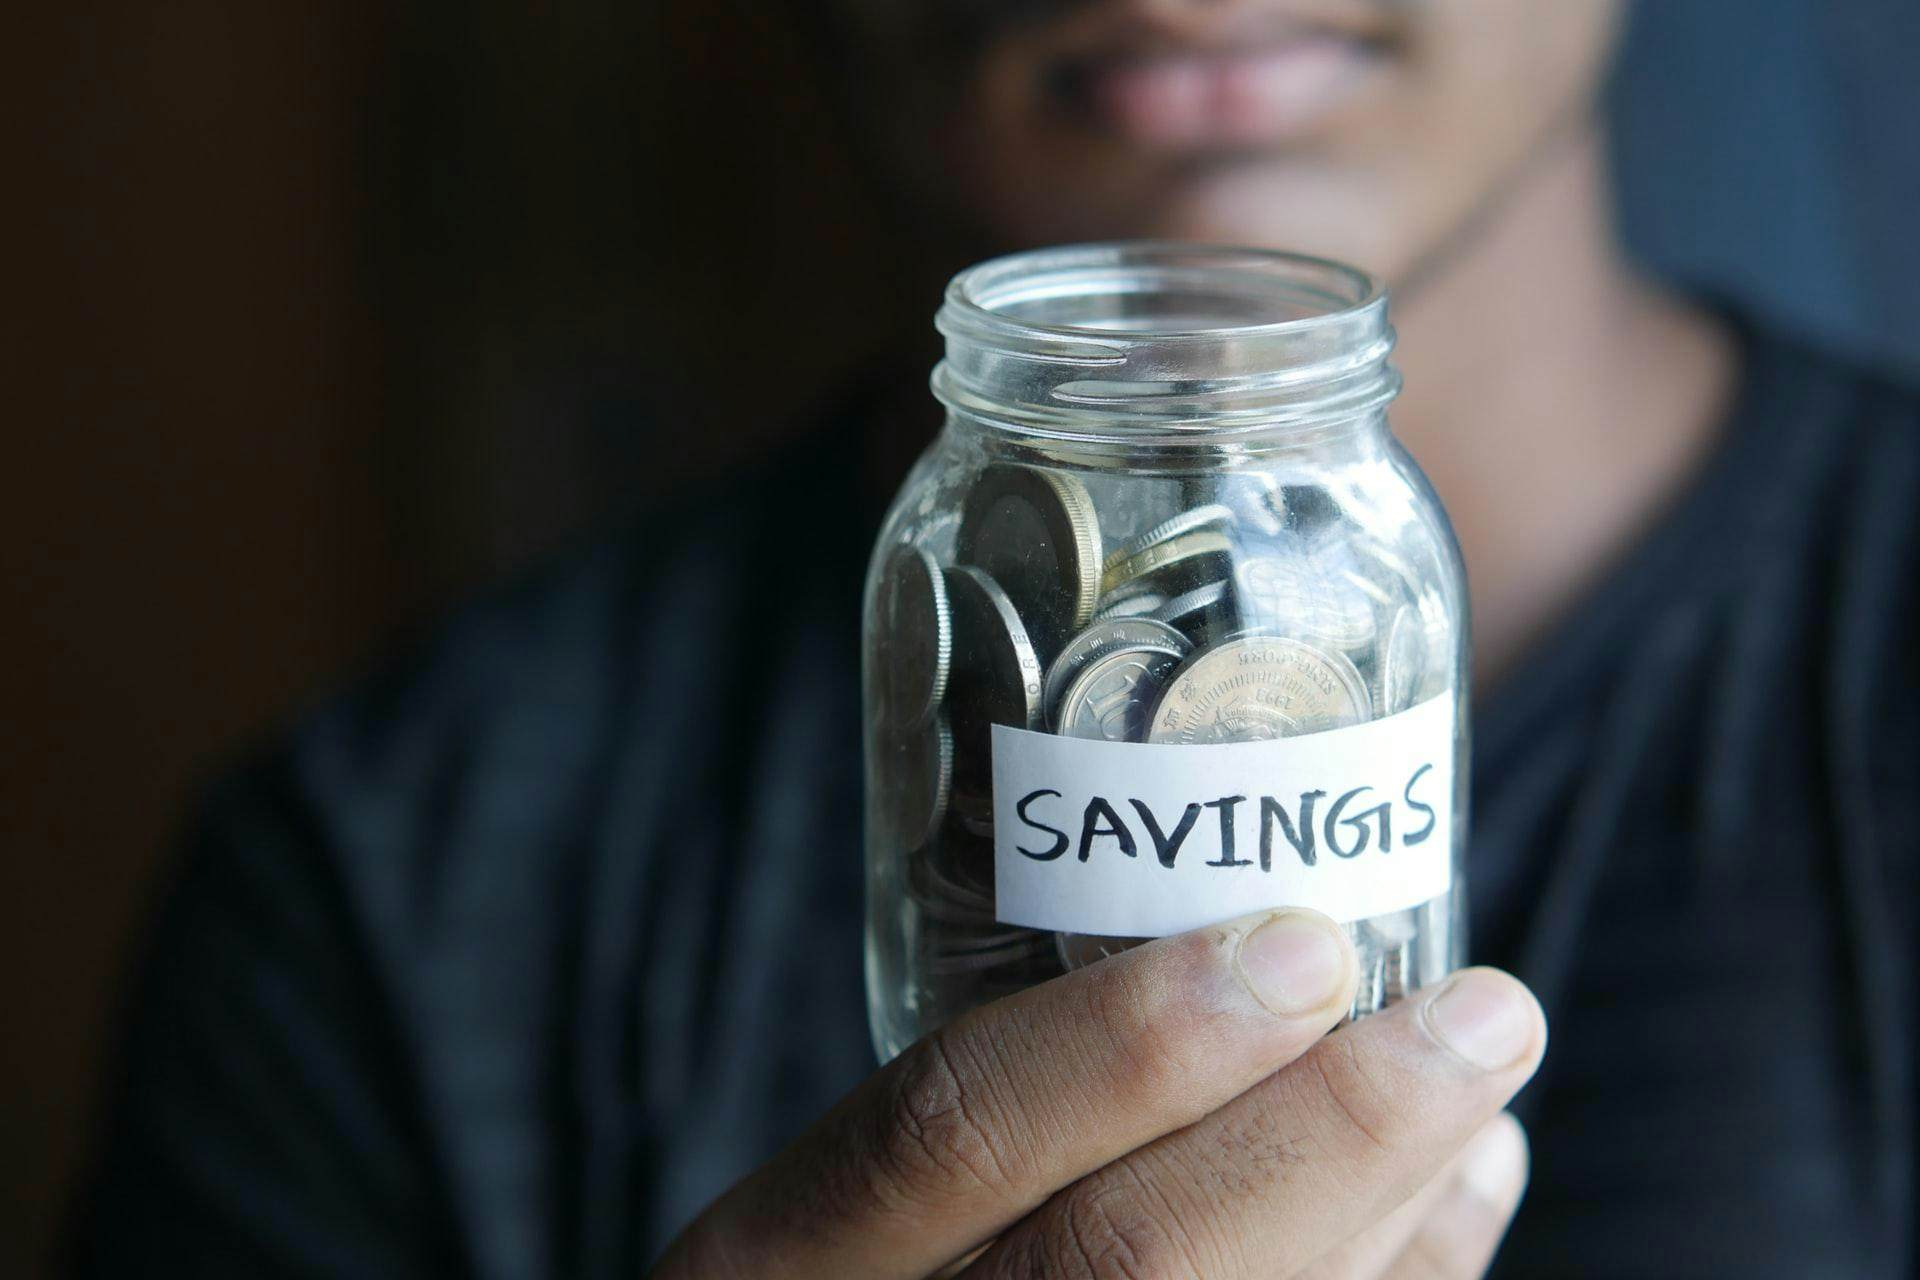 How has Covid-19 impacted household savings?